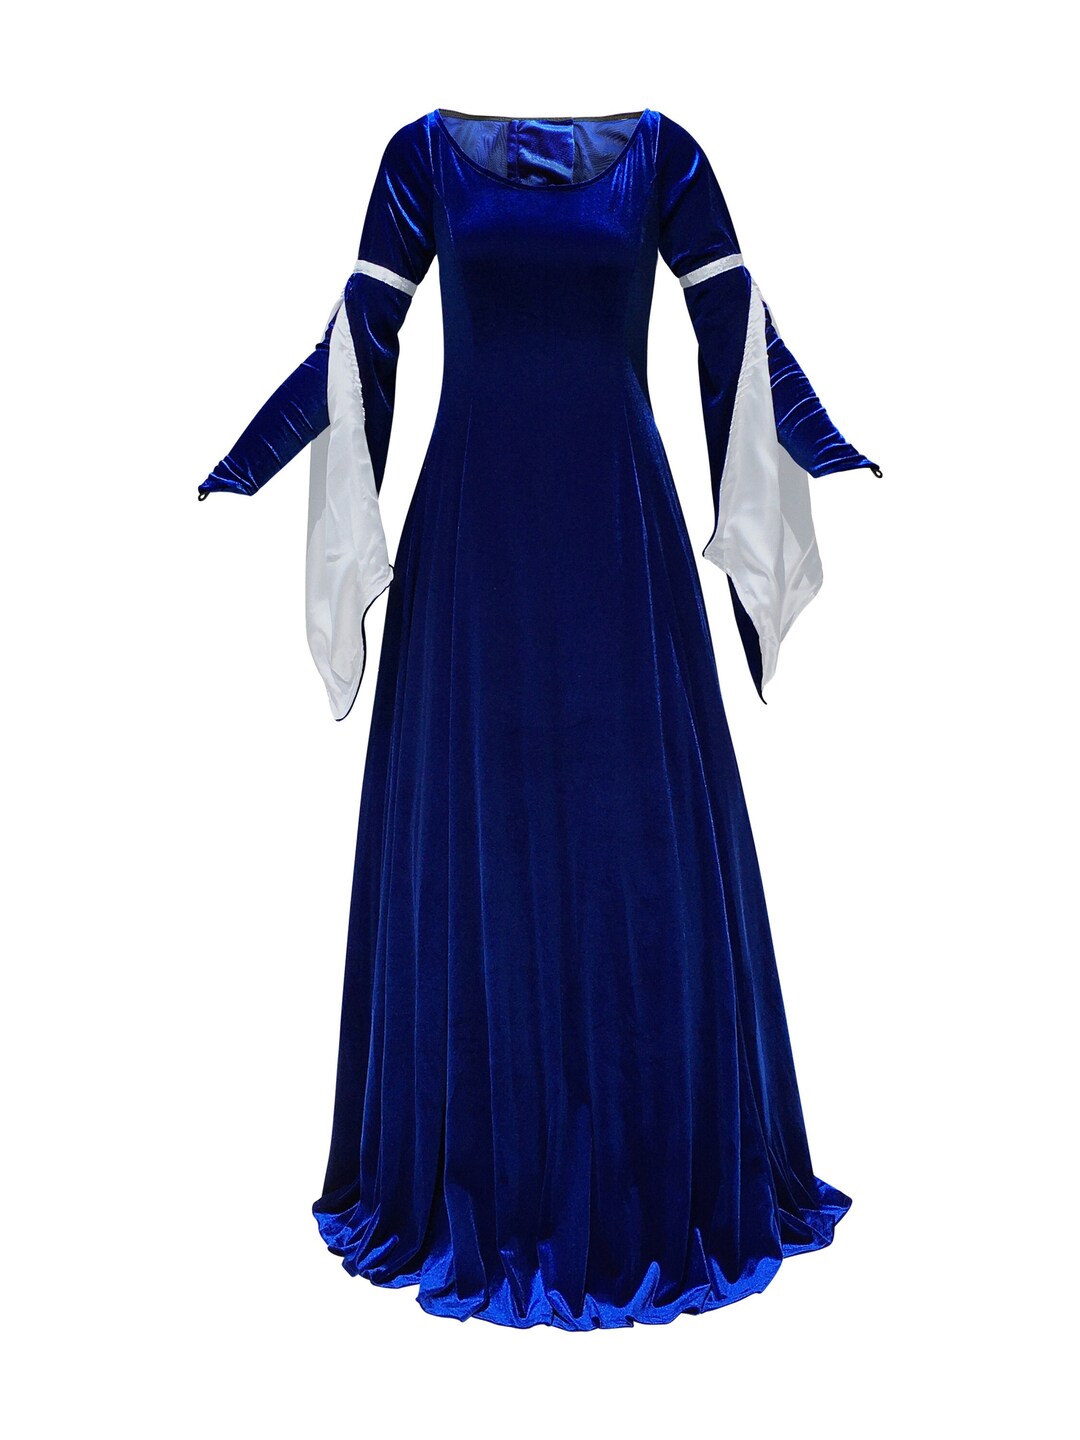 Medieval Dress, Renaissance Costume, Queen Larp Women Cosplay Gown ...